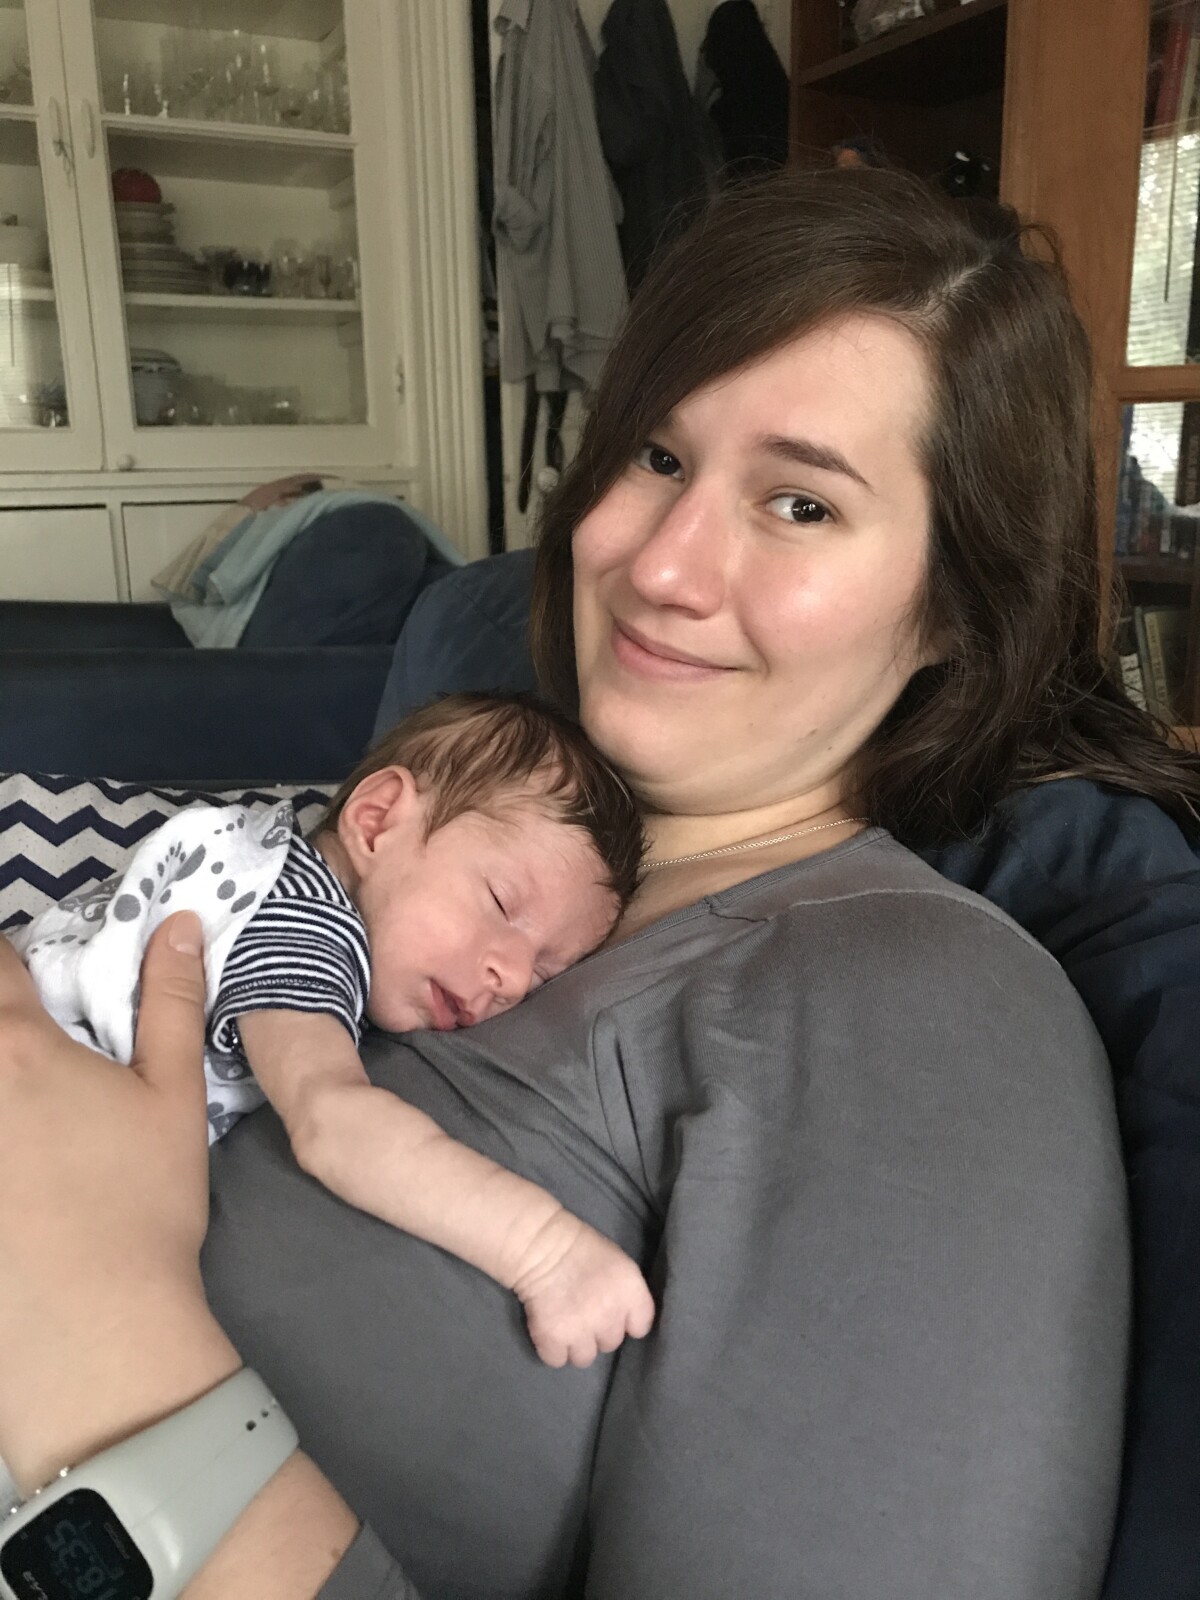 Last world breastfeeding week post!